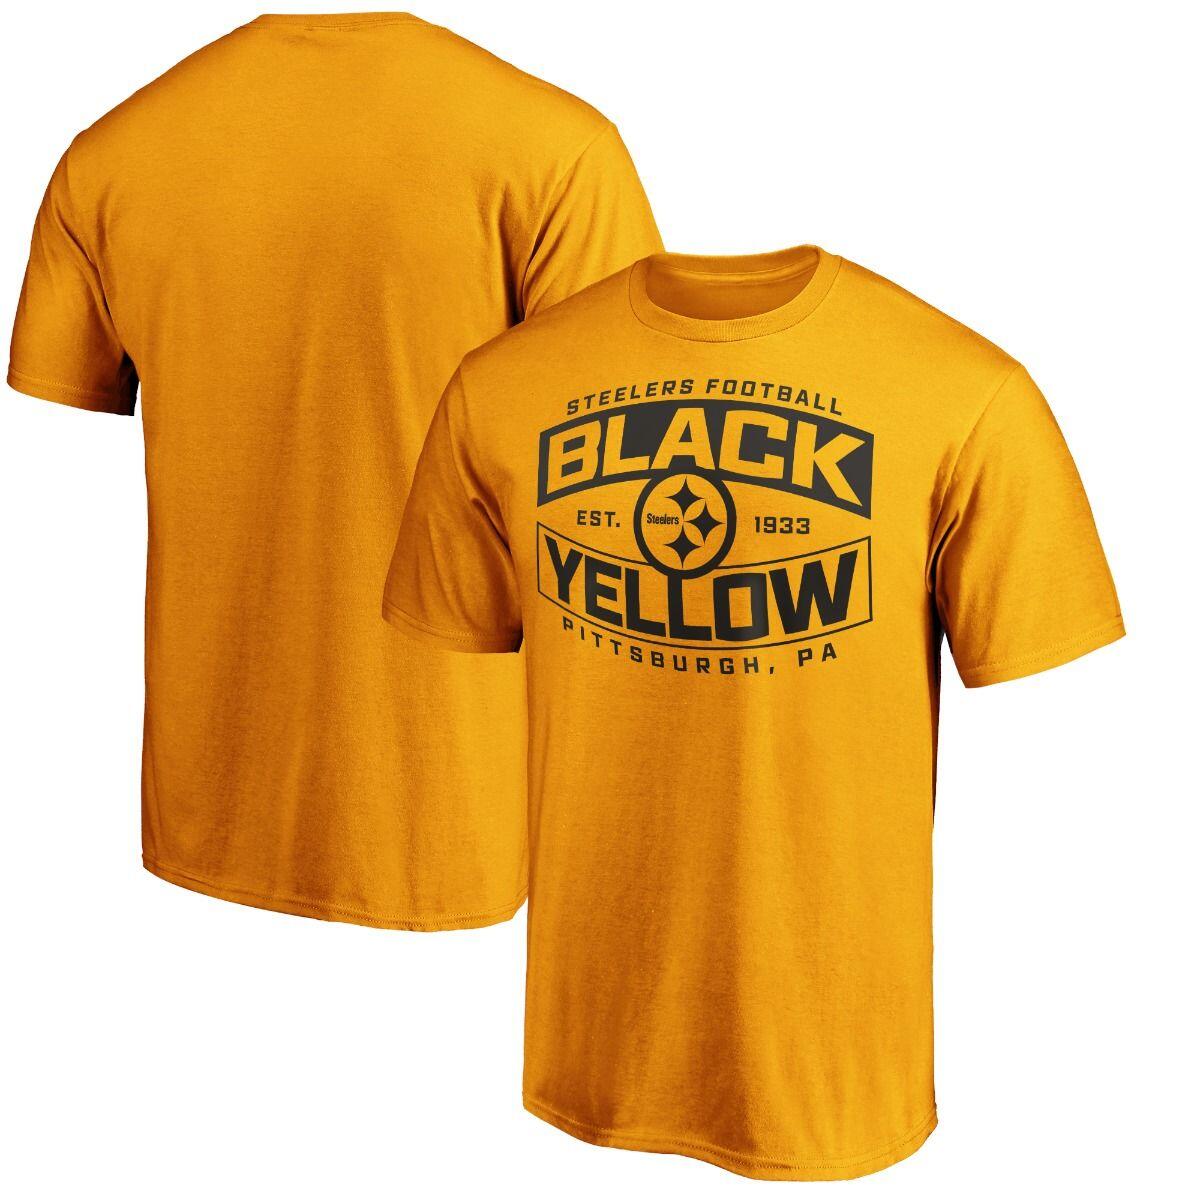 Men's Pittsburgh Steelers Black &Yellow Bars Short Sleeve Gold T-Shirt